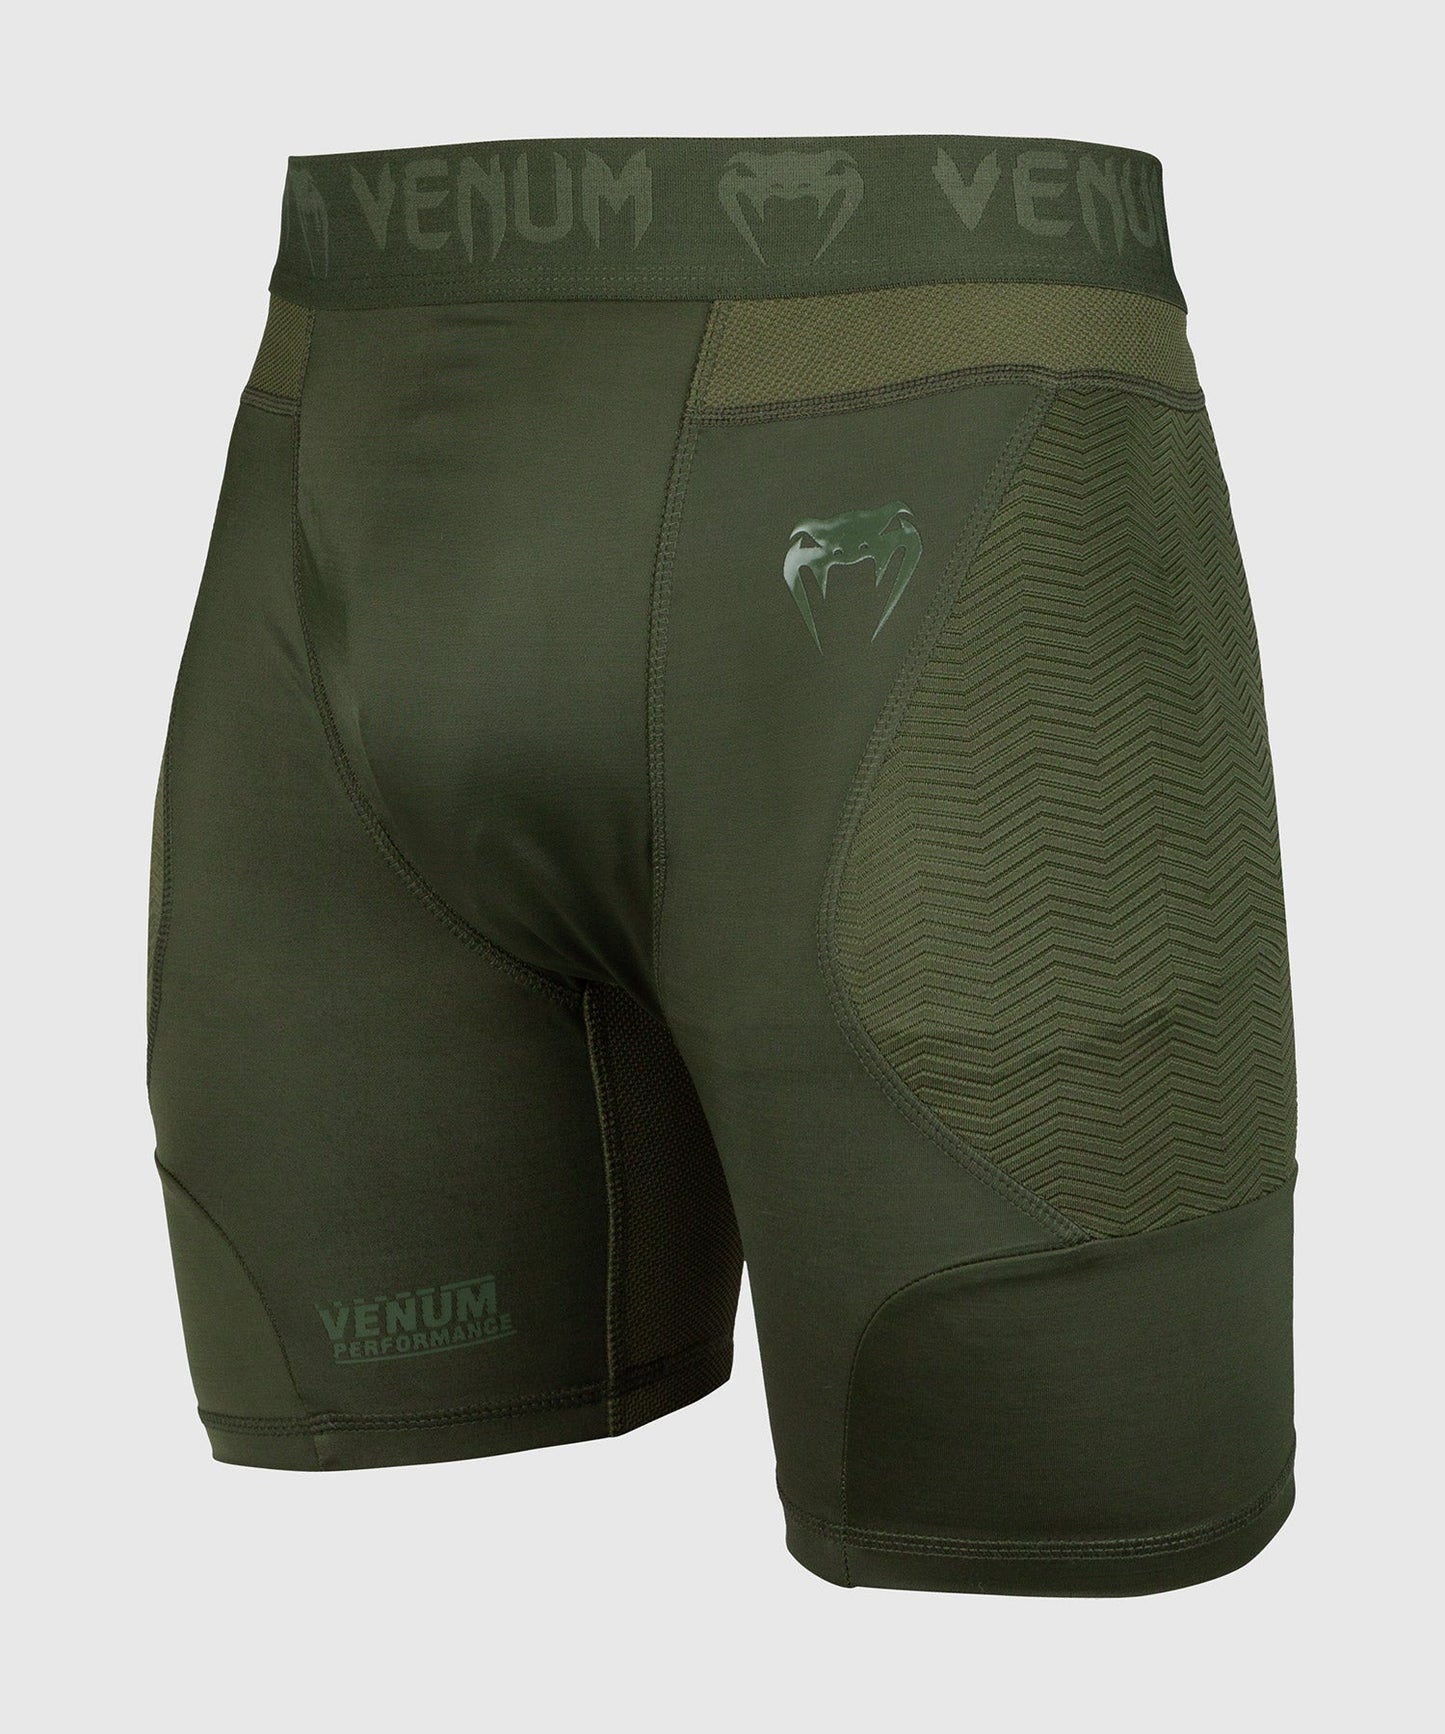 Venum G-Fit Compression Shorts - Khaki